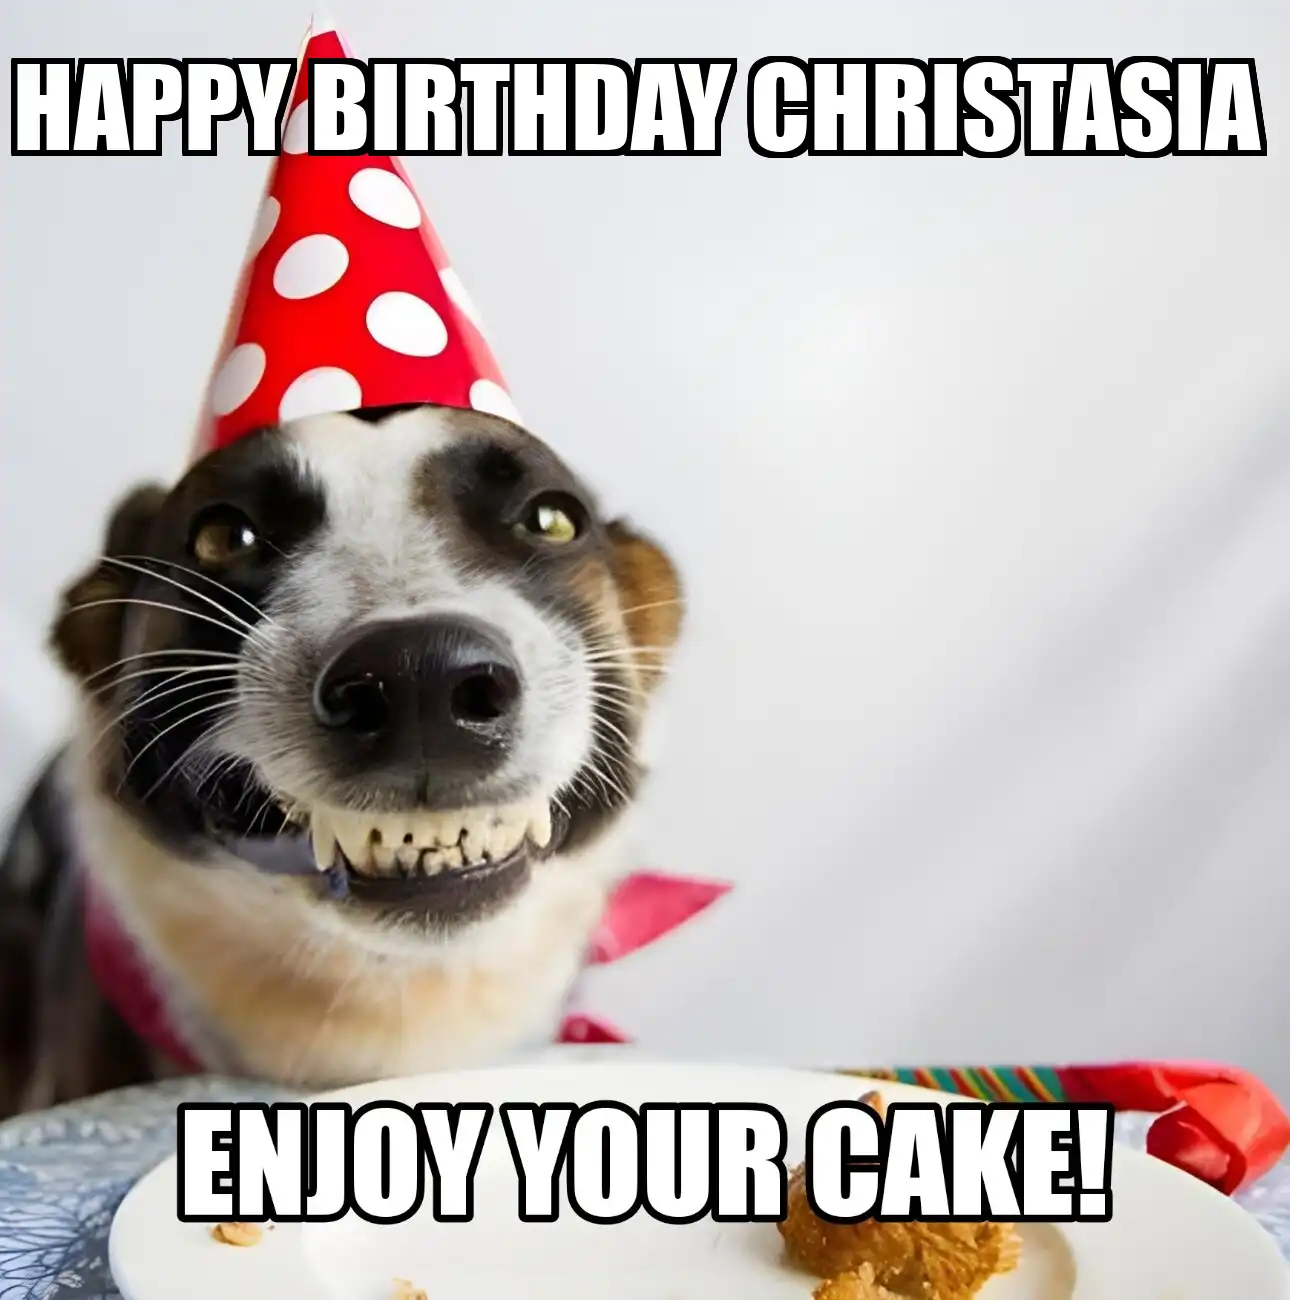 Happy Birthday Christasia Enjoy Your Cake Dog Meme